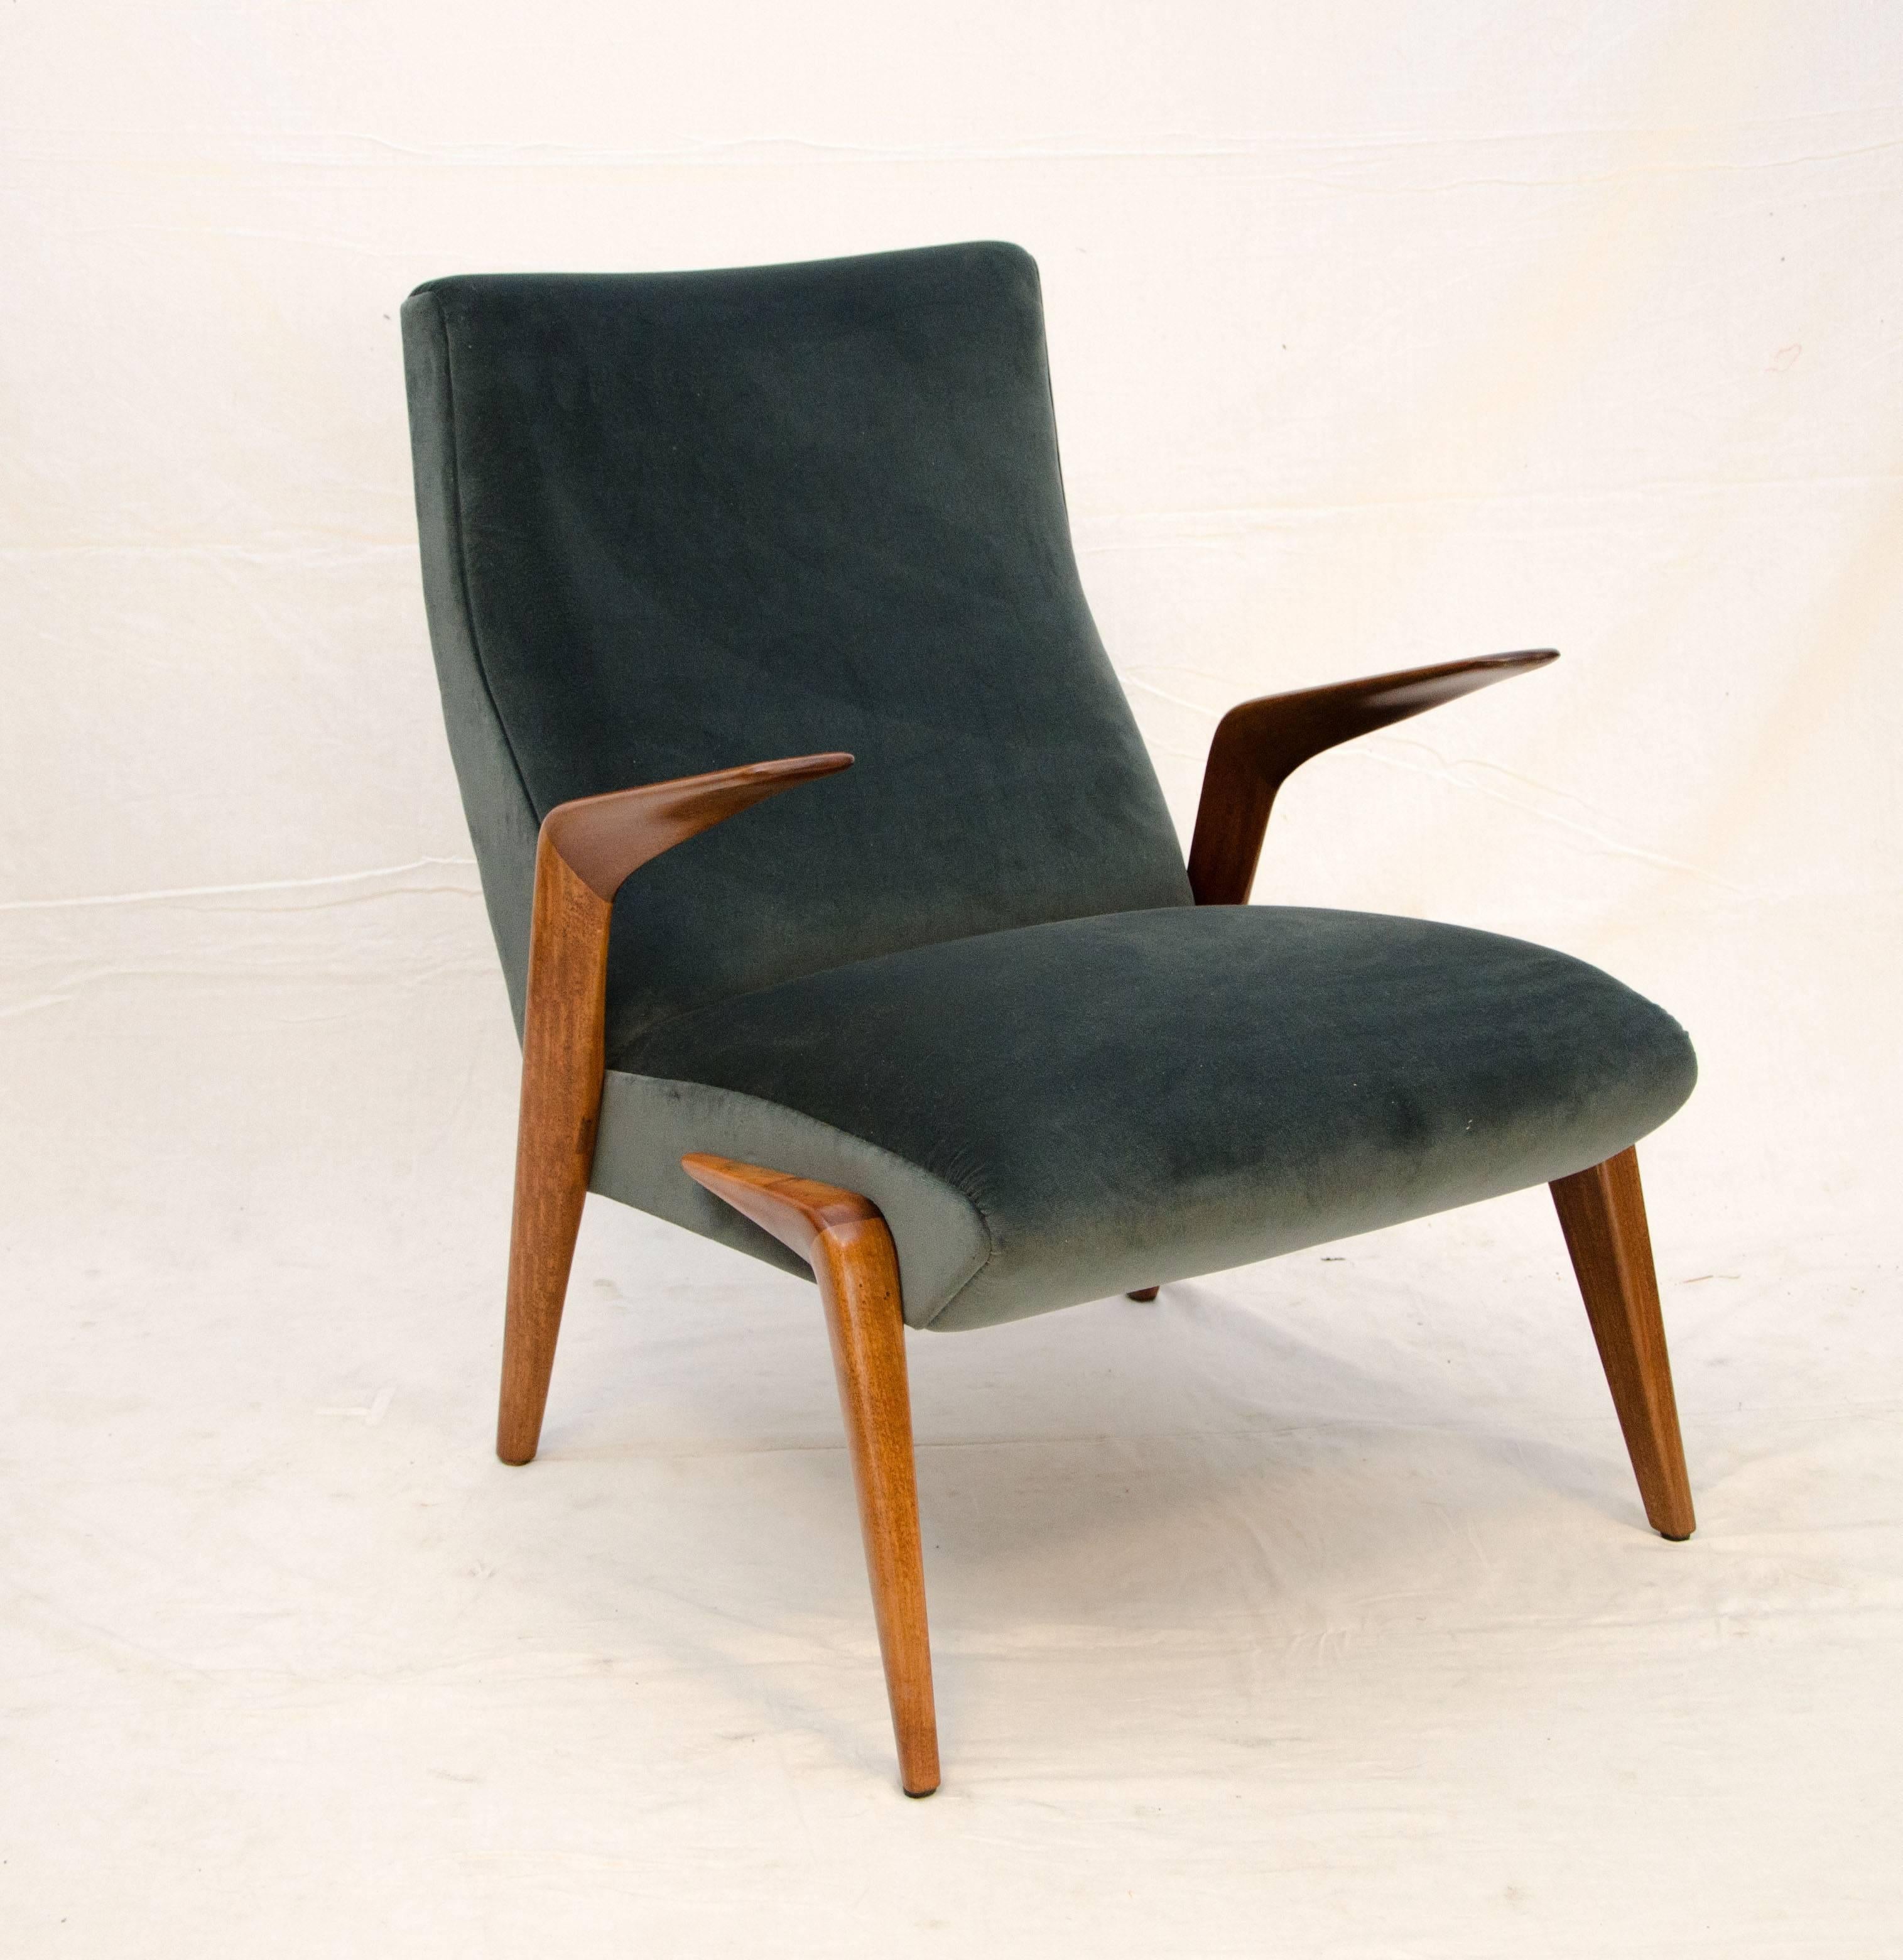 Italian Lounge Chair D71 Osvaldo Borsani for Tecno In Excellent Condition For Sale In Crockett, CA